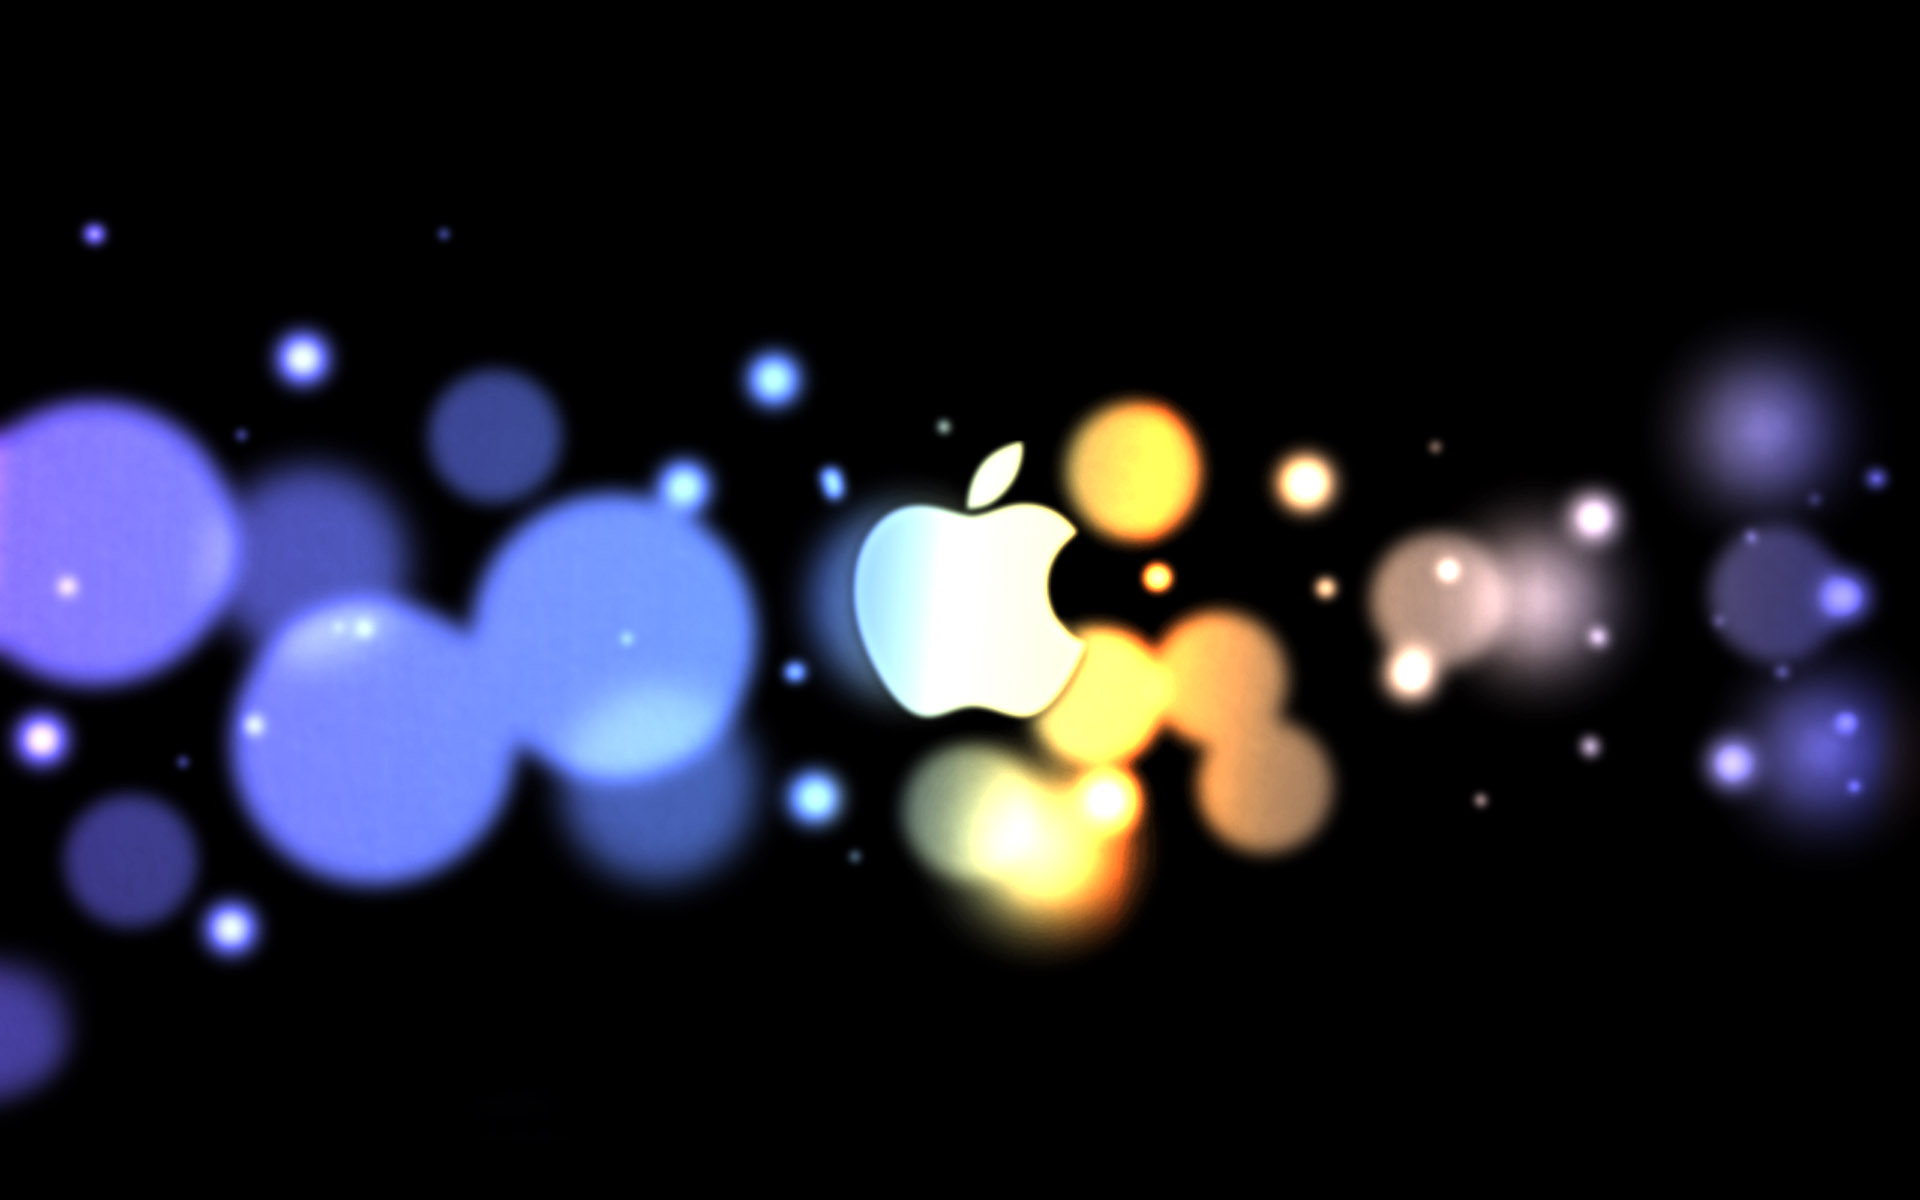 apple wallpaper download,black,blue,light,lighting,night